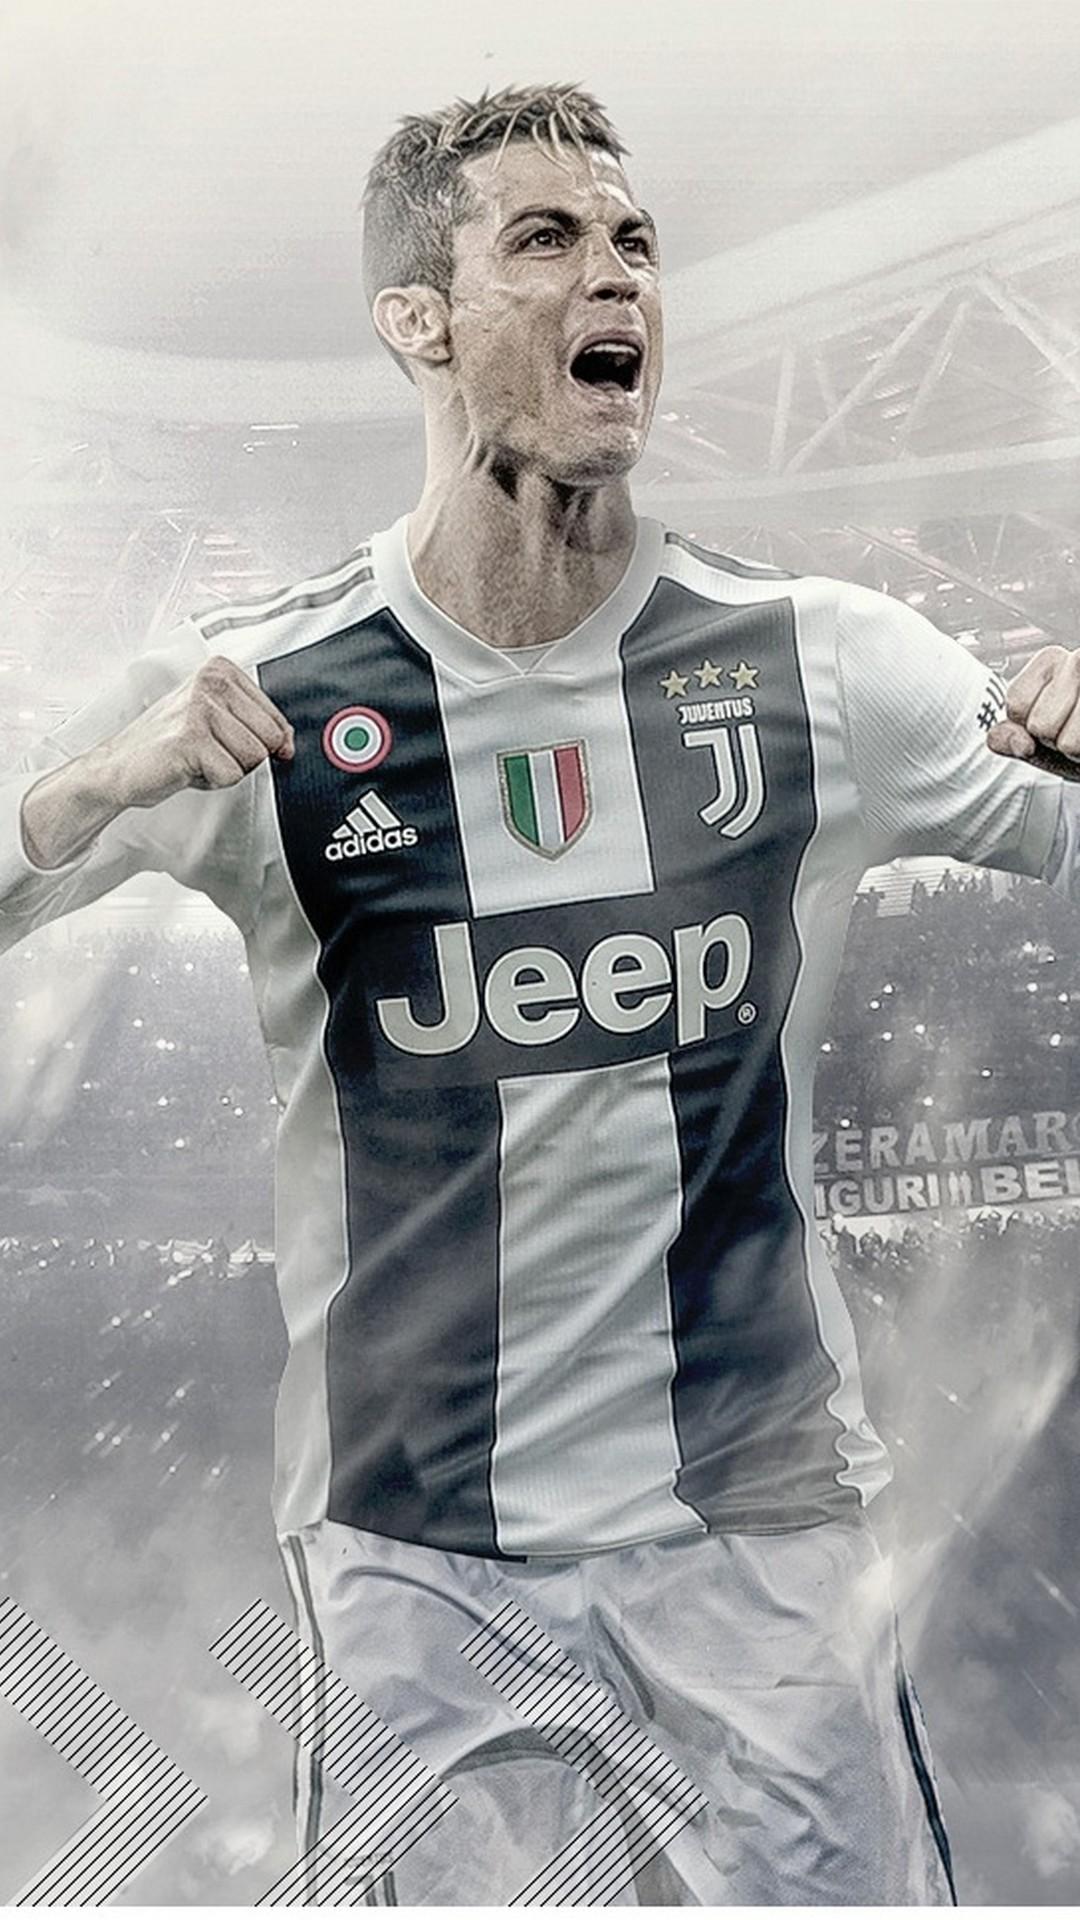 Wallpaper Android Cristiano Ronaldo Juventus Android Wallpaper